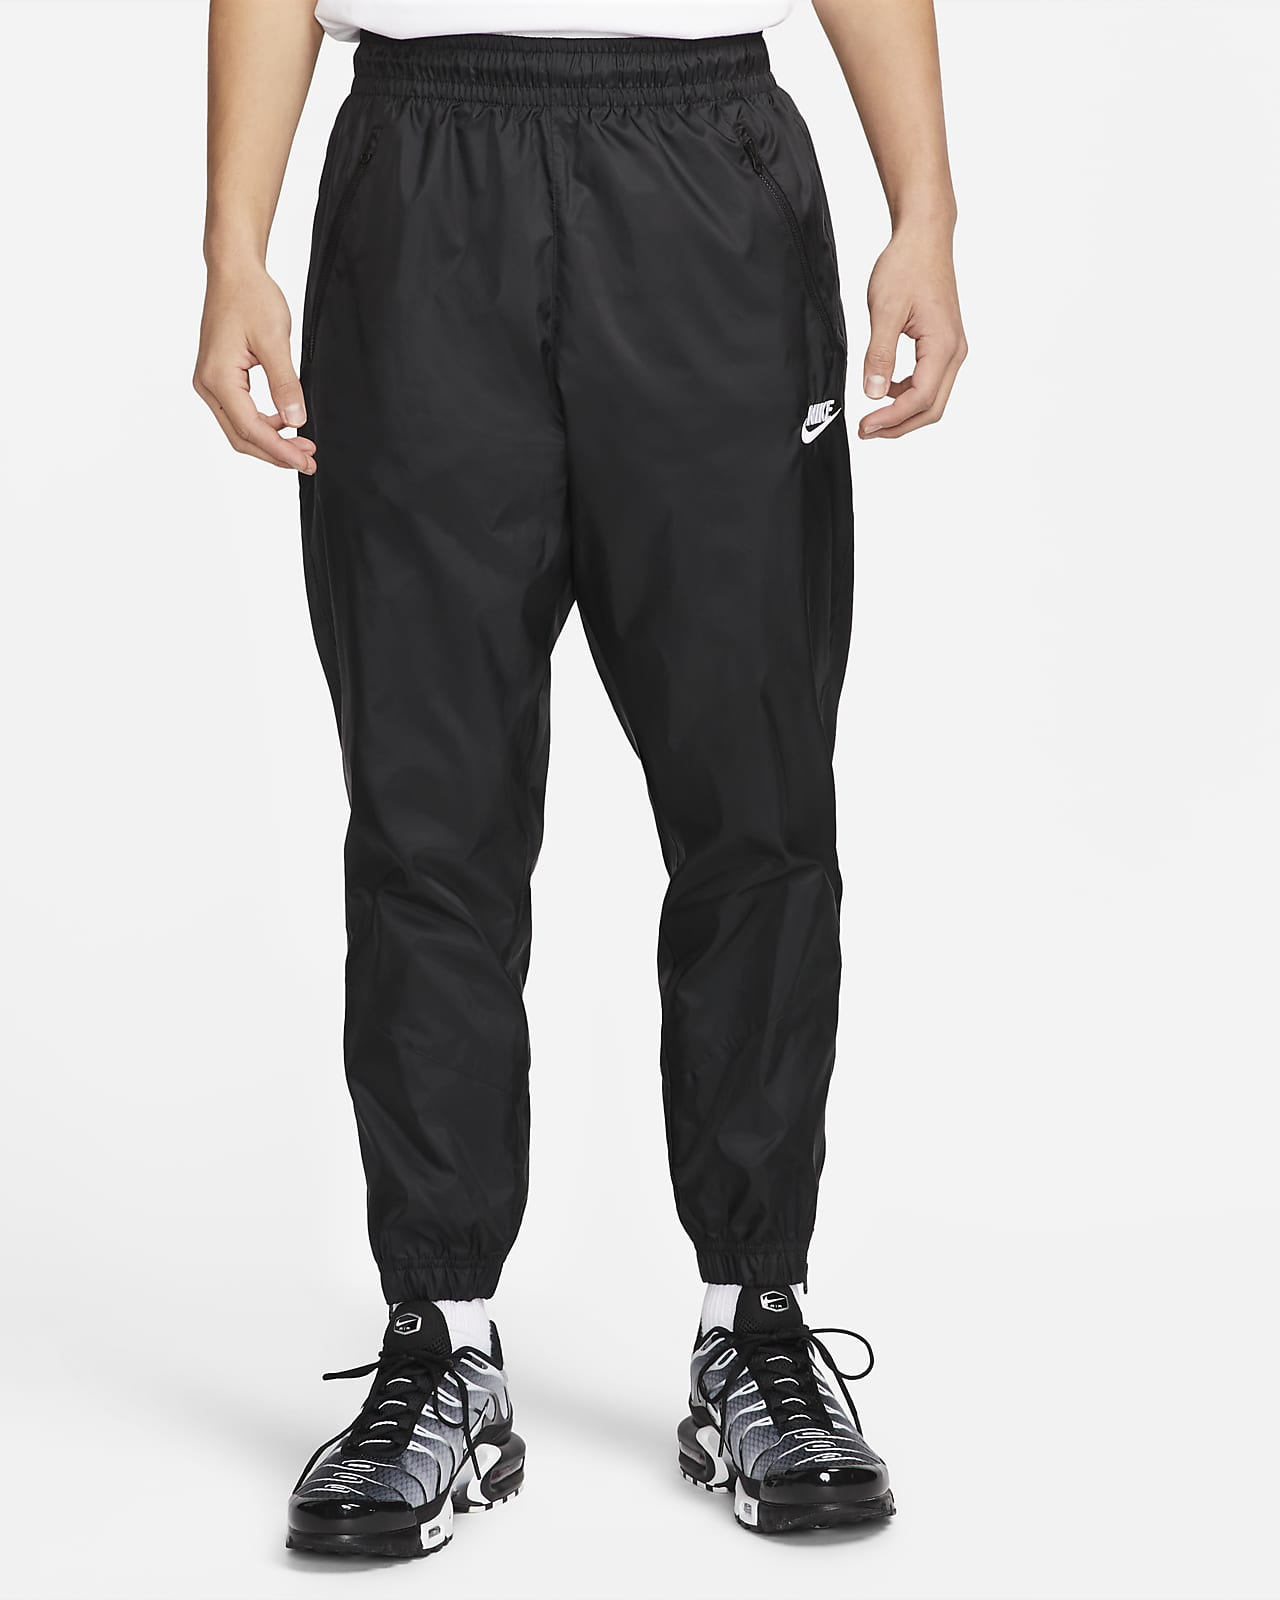 Nike Mens Medium M Track Pants RN#56323 – CA#05553 Black – ASA College:  Florida